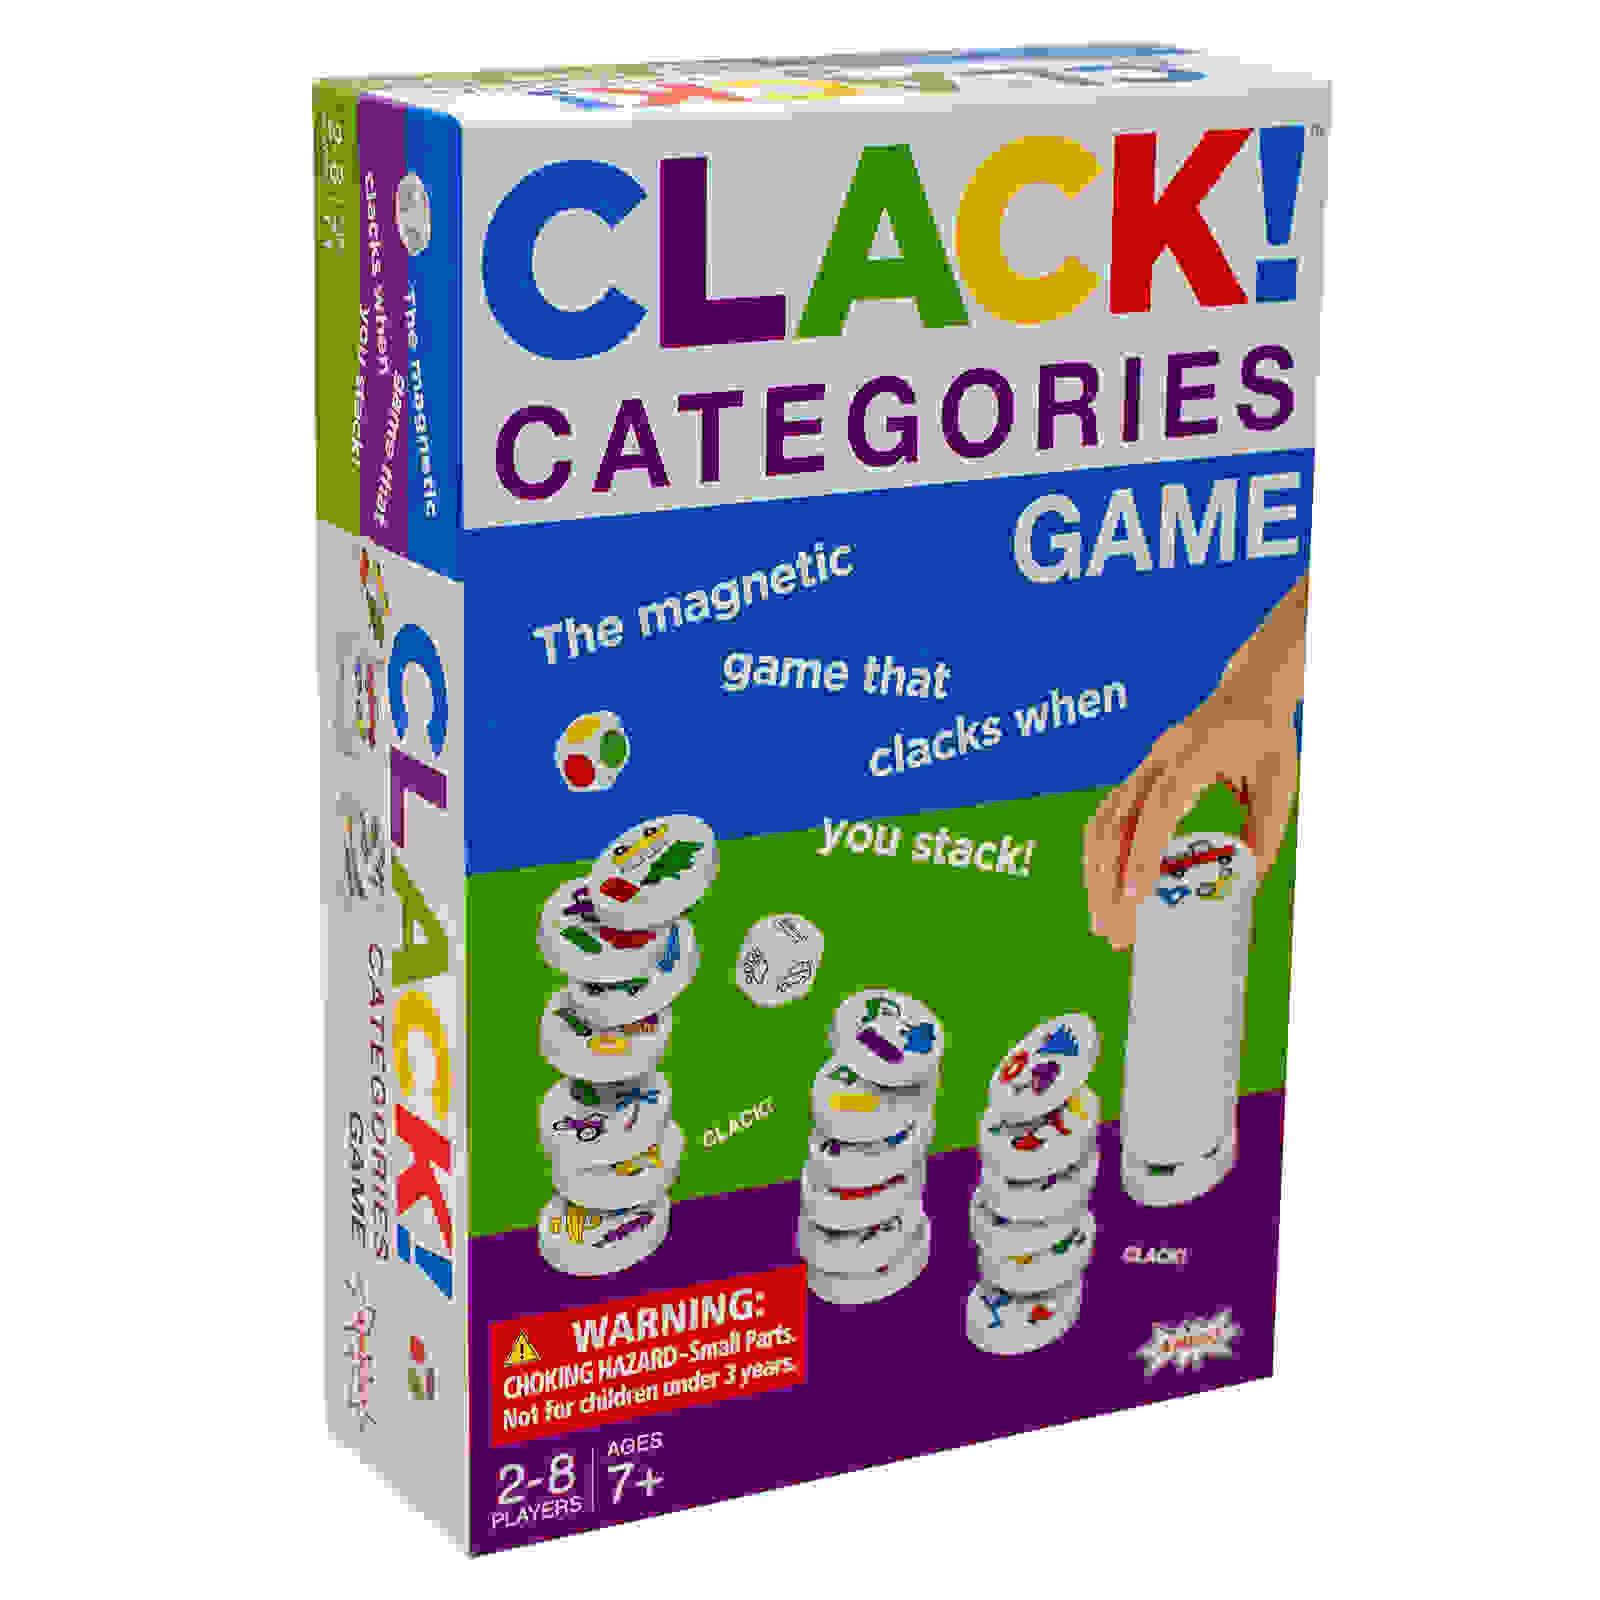 CLACK! Categories Game